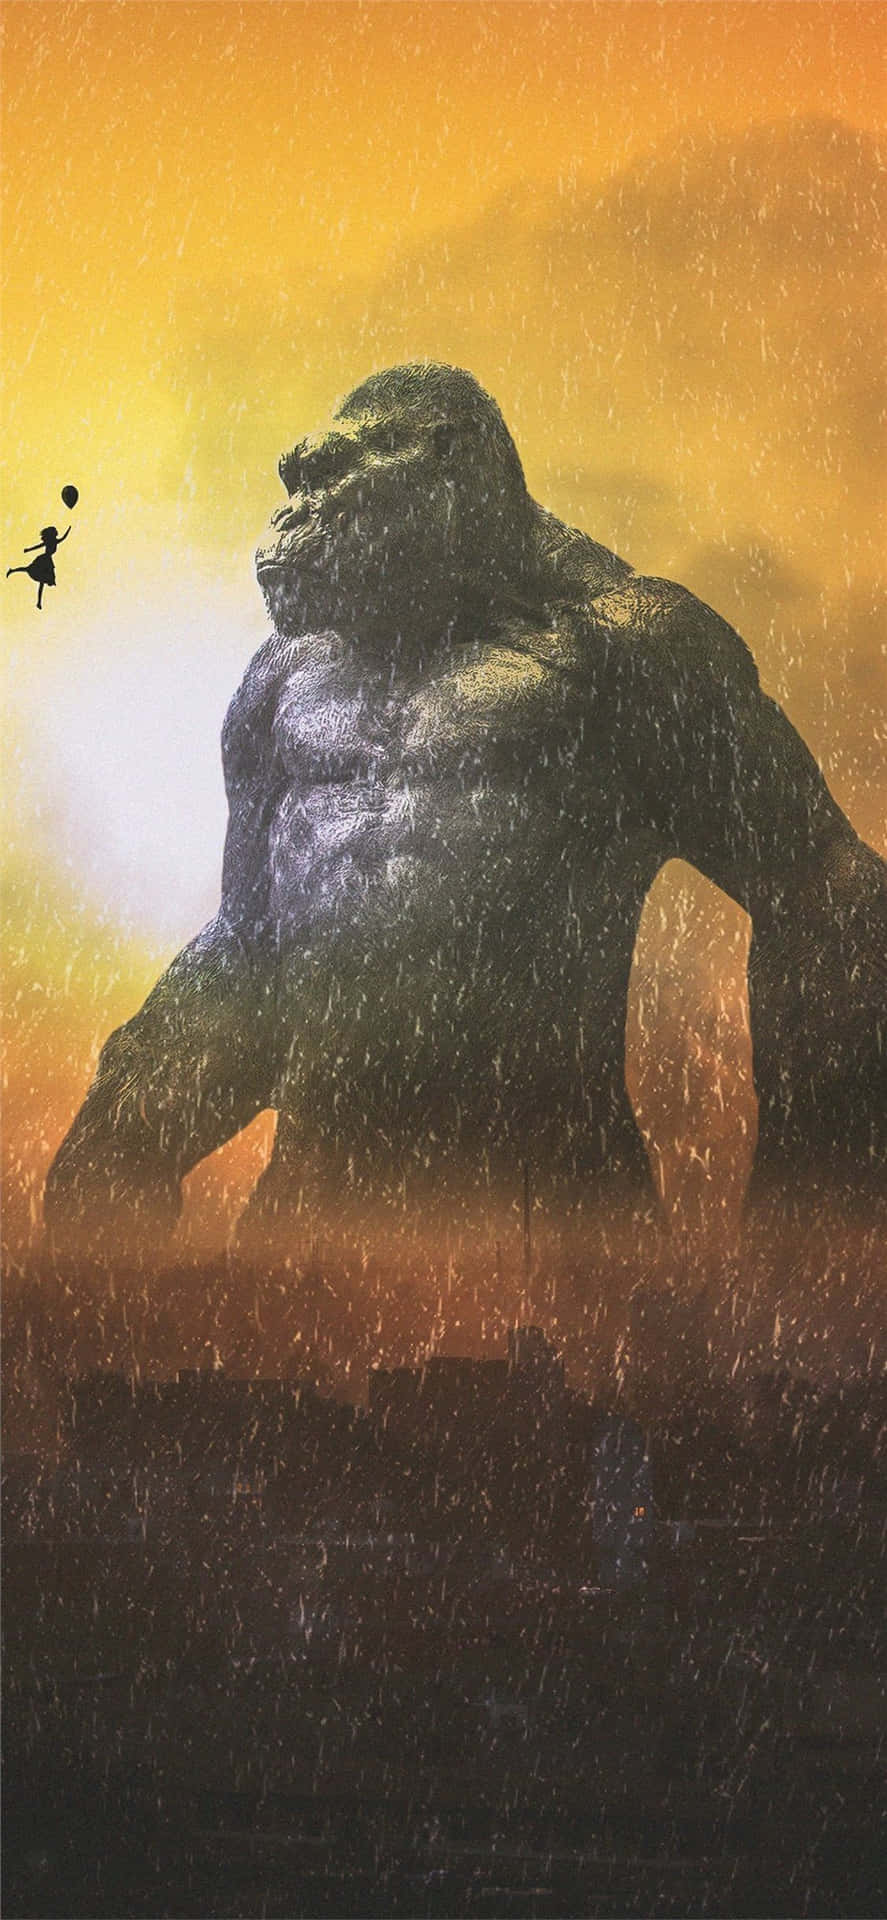 Iphonexs Max Gorilla Bakgrund King Kong